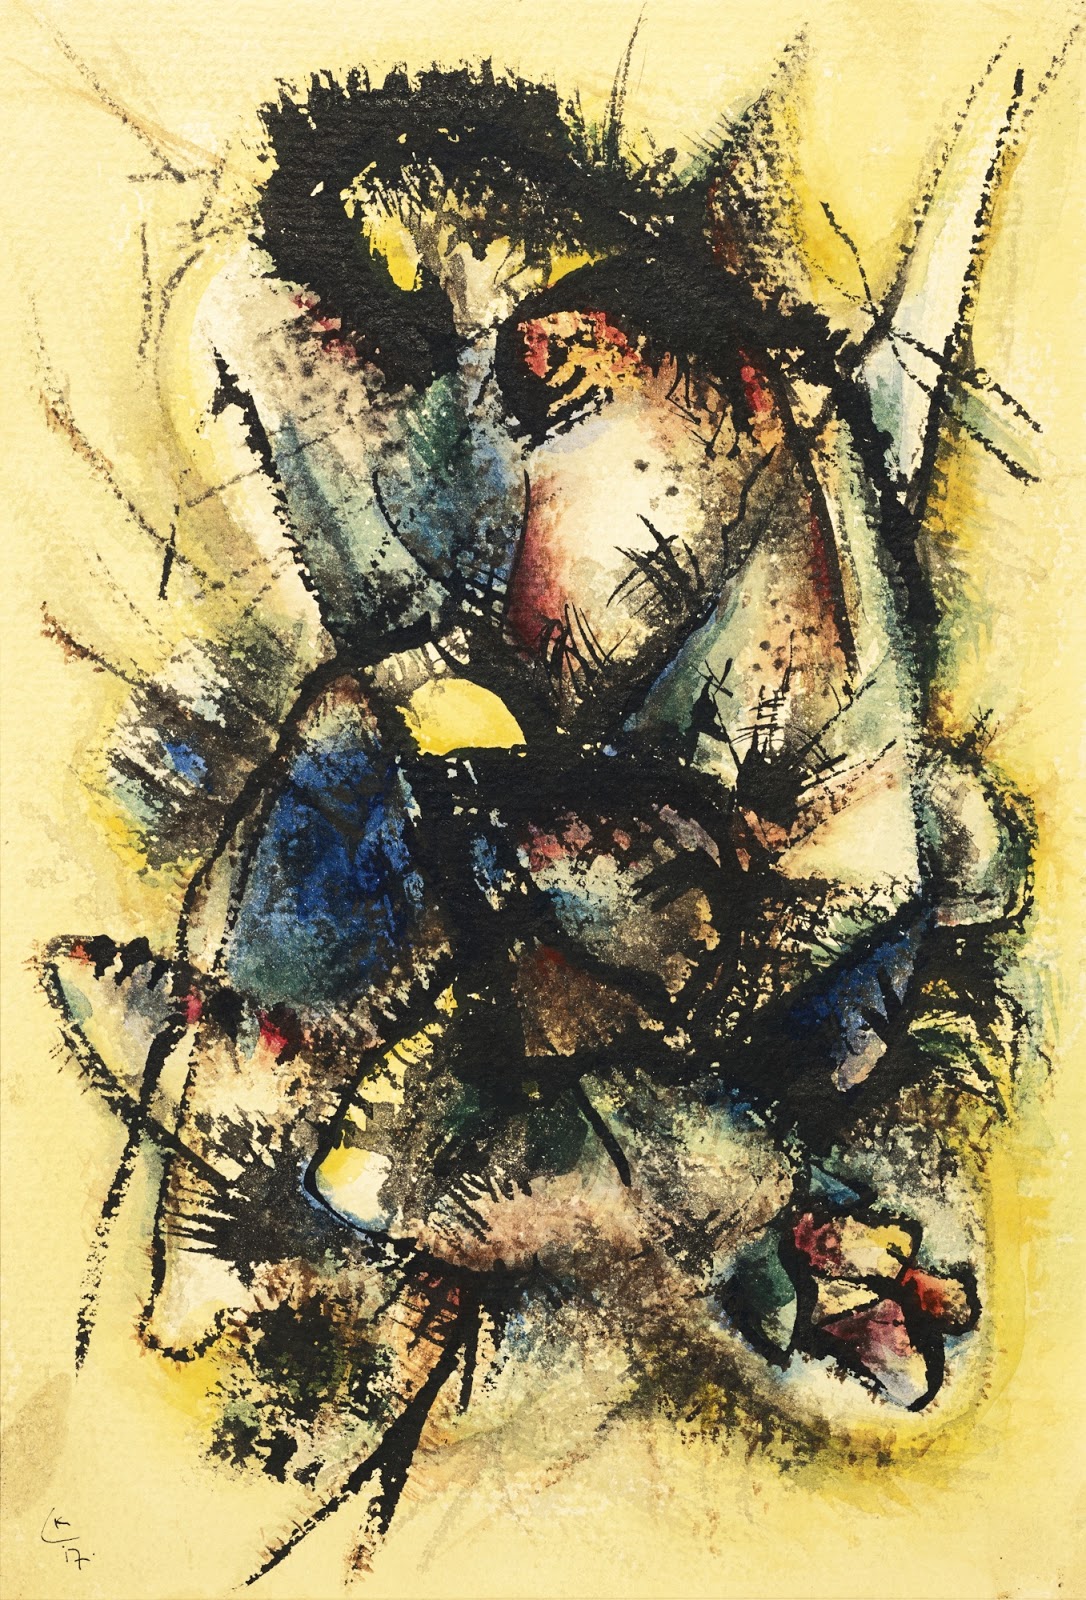 Wassily+Kandinsky-1866-1944 (326).jpg